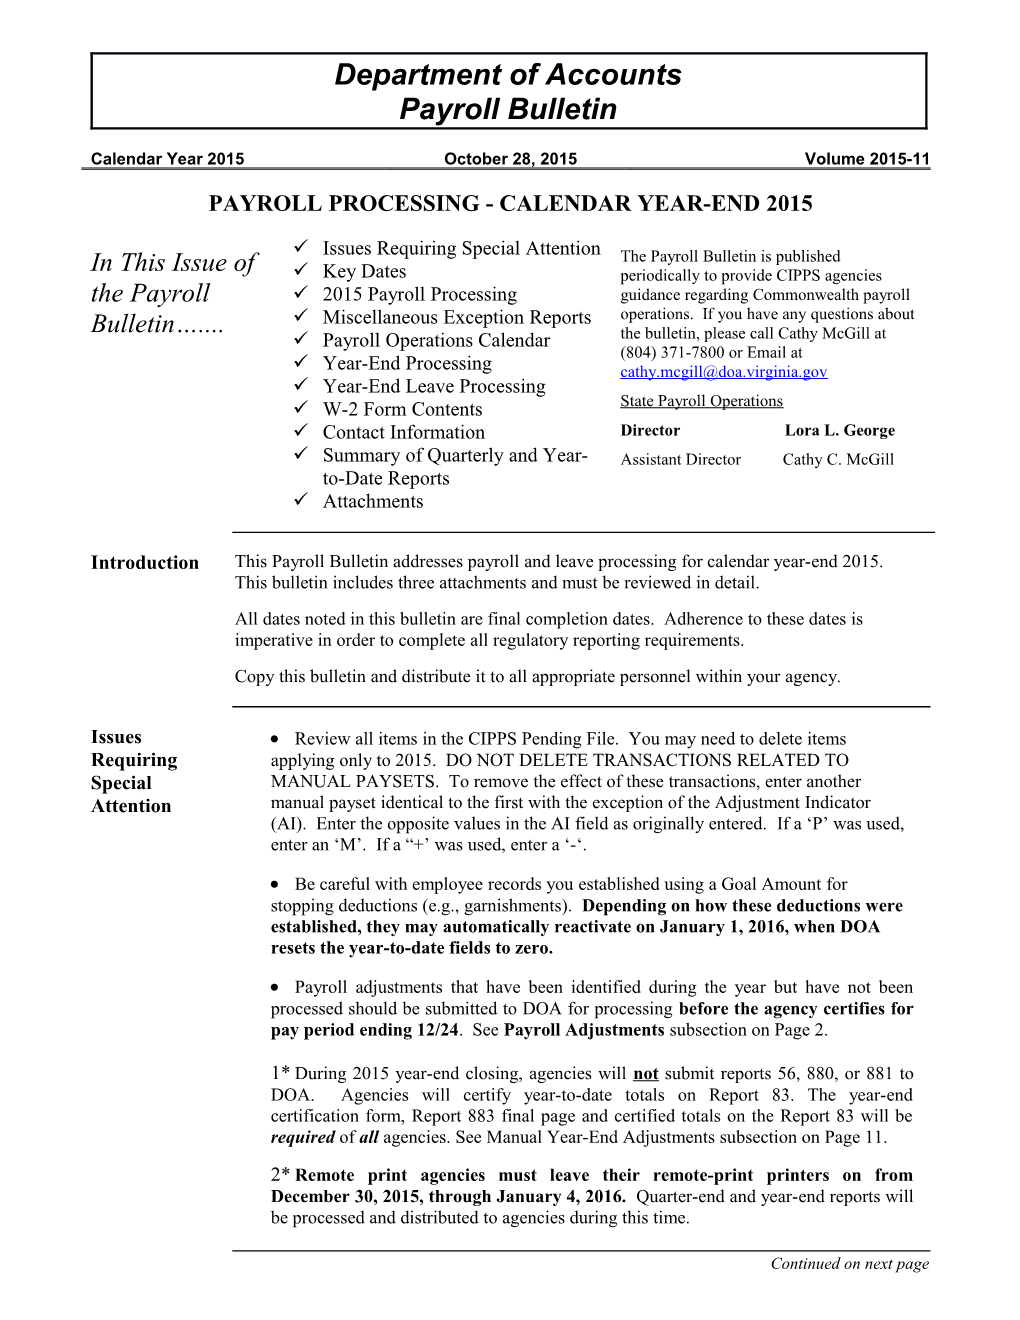 Payroll Bulletin - Calendar Year-End 2015